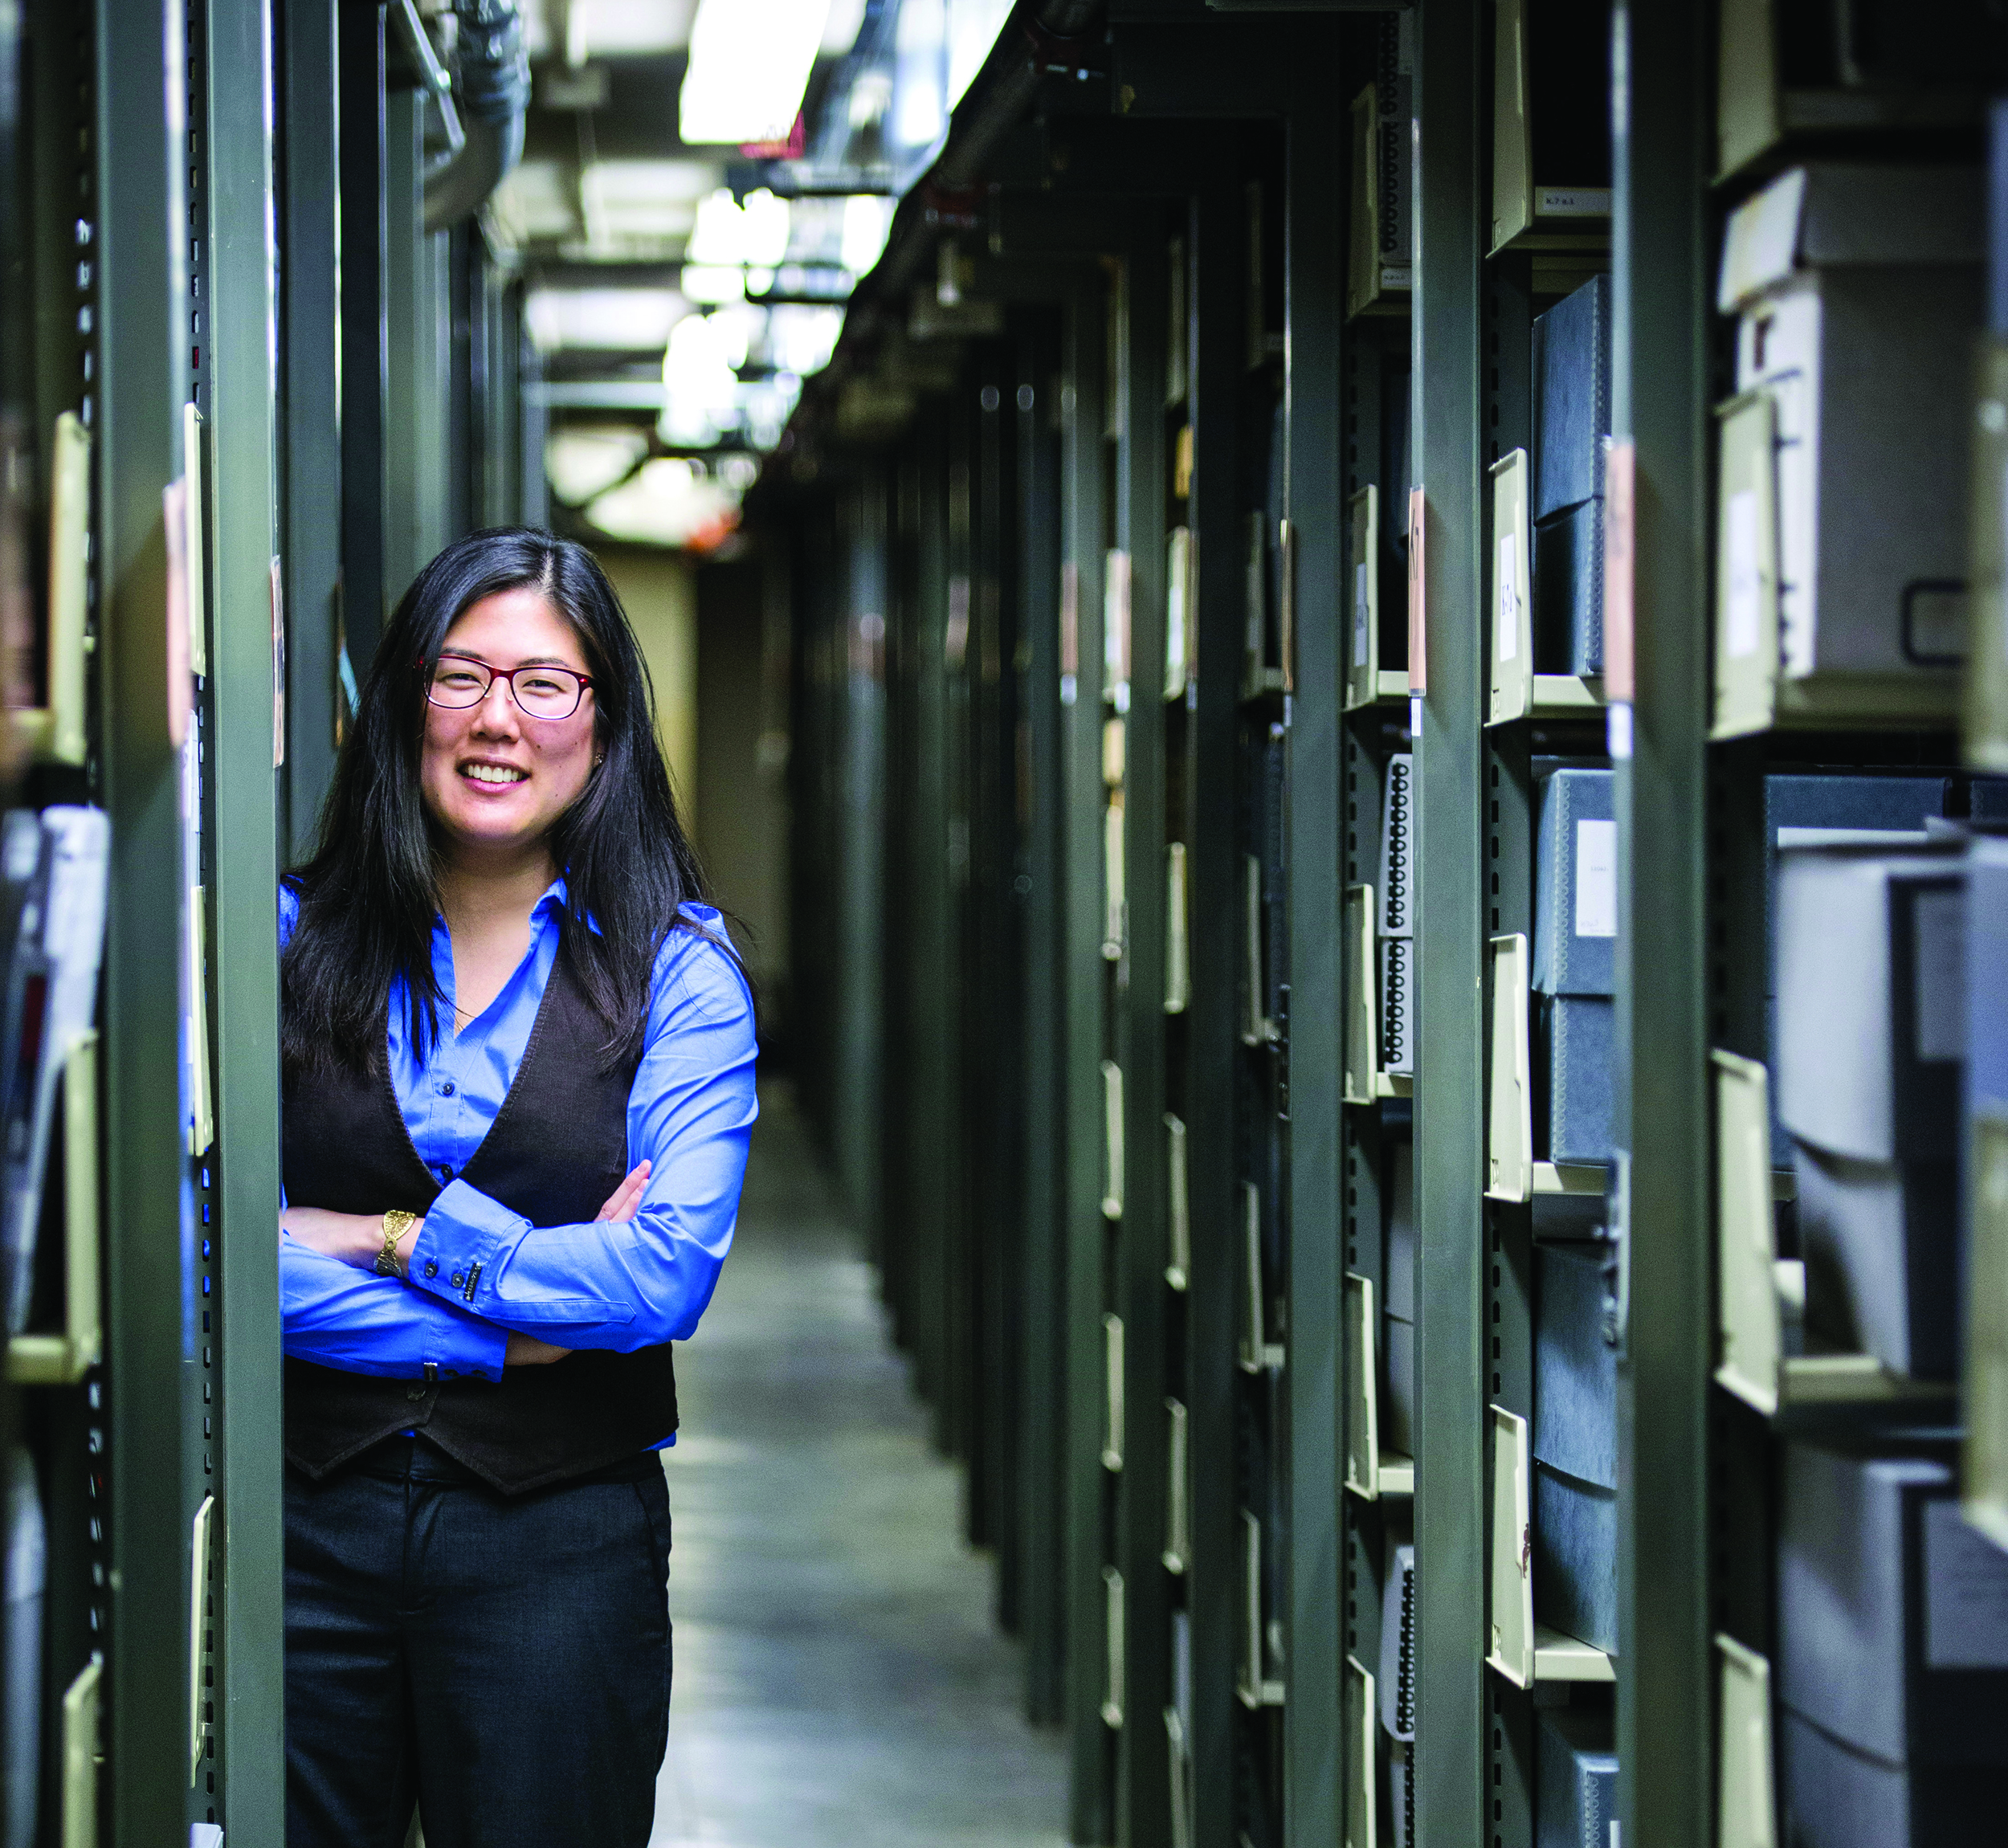 Heidi Kim in the library stacks peers around the corner. (photo by Steve Exum)